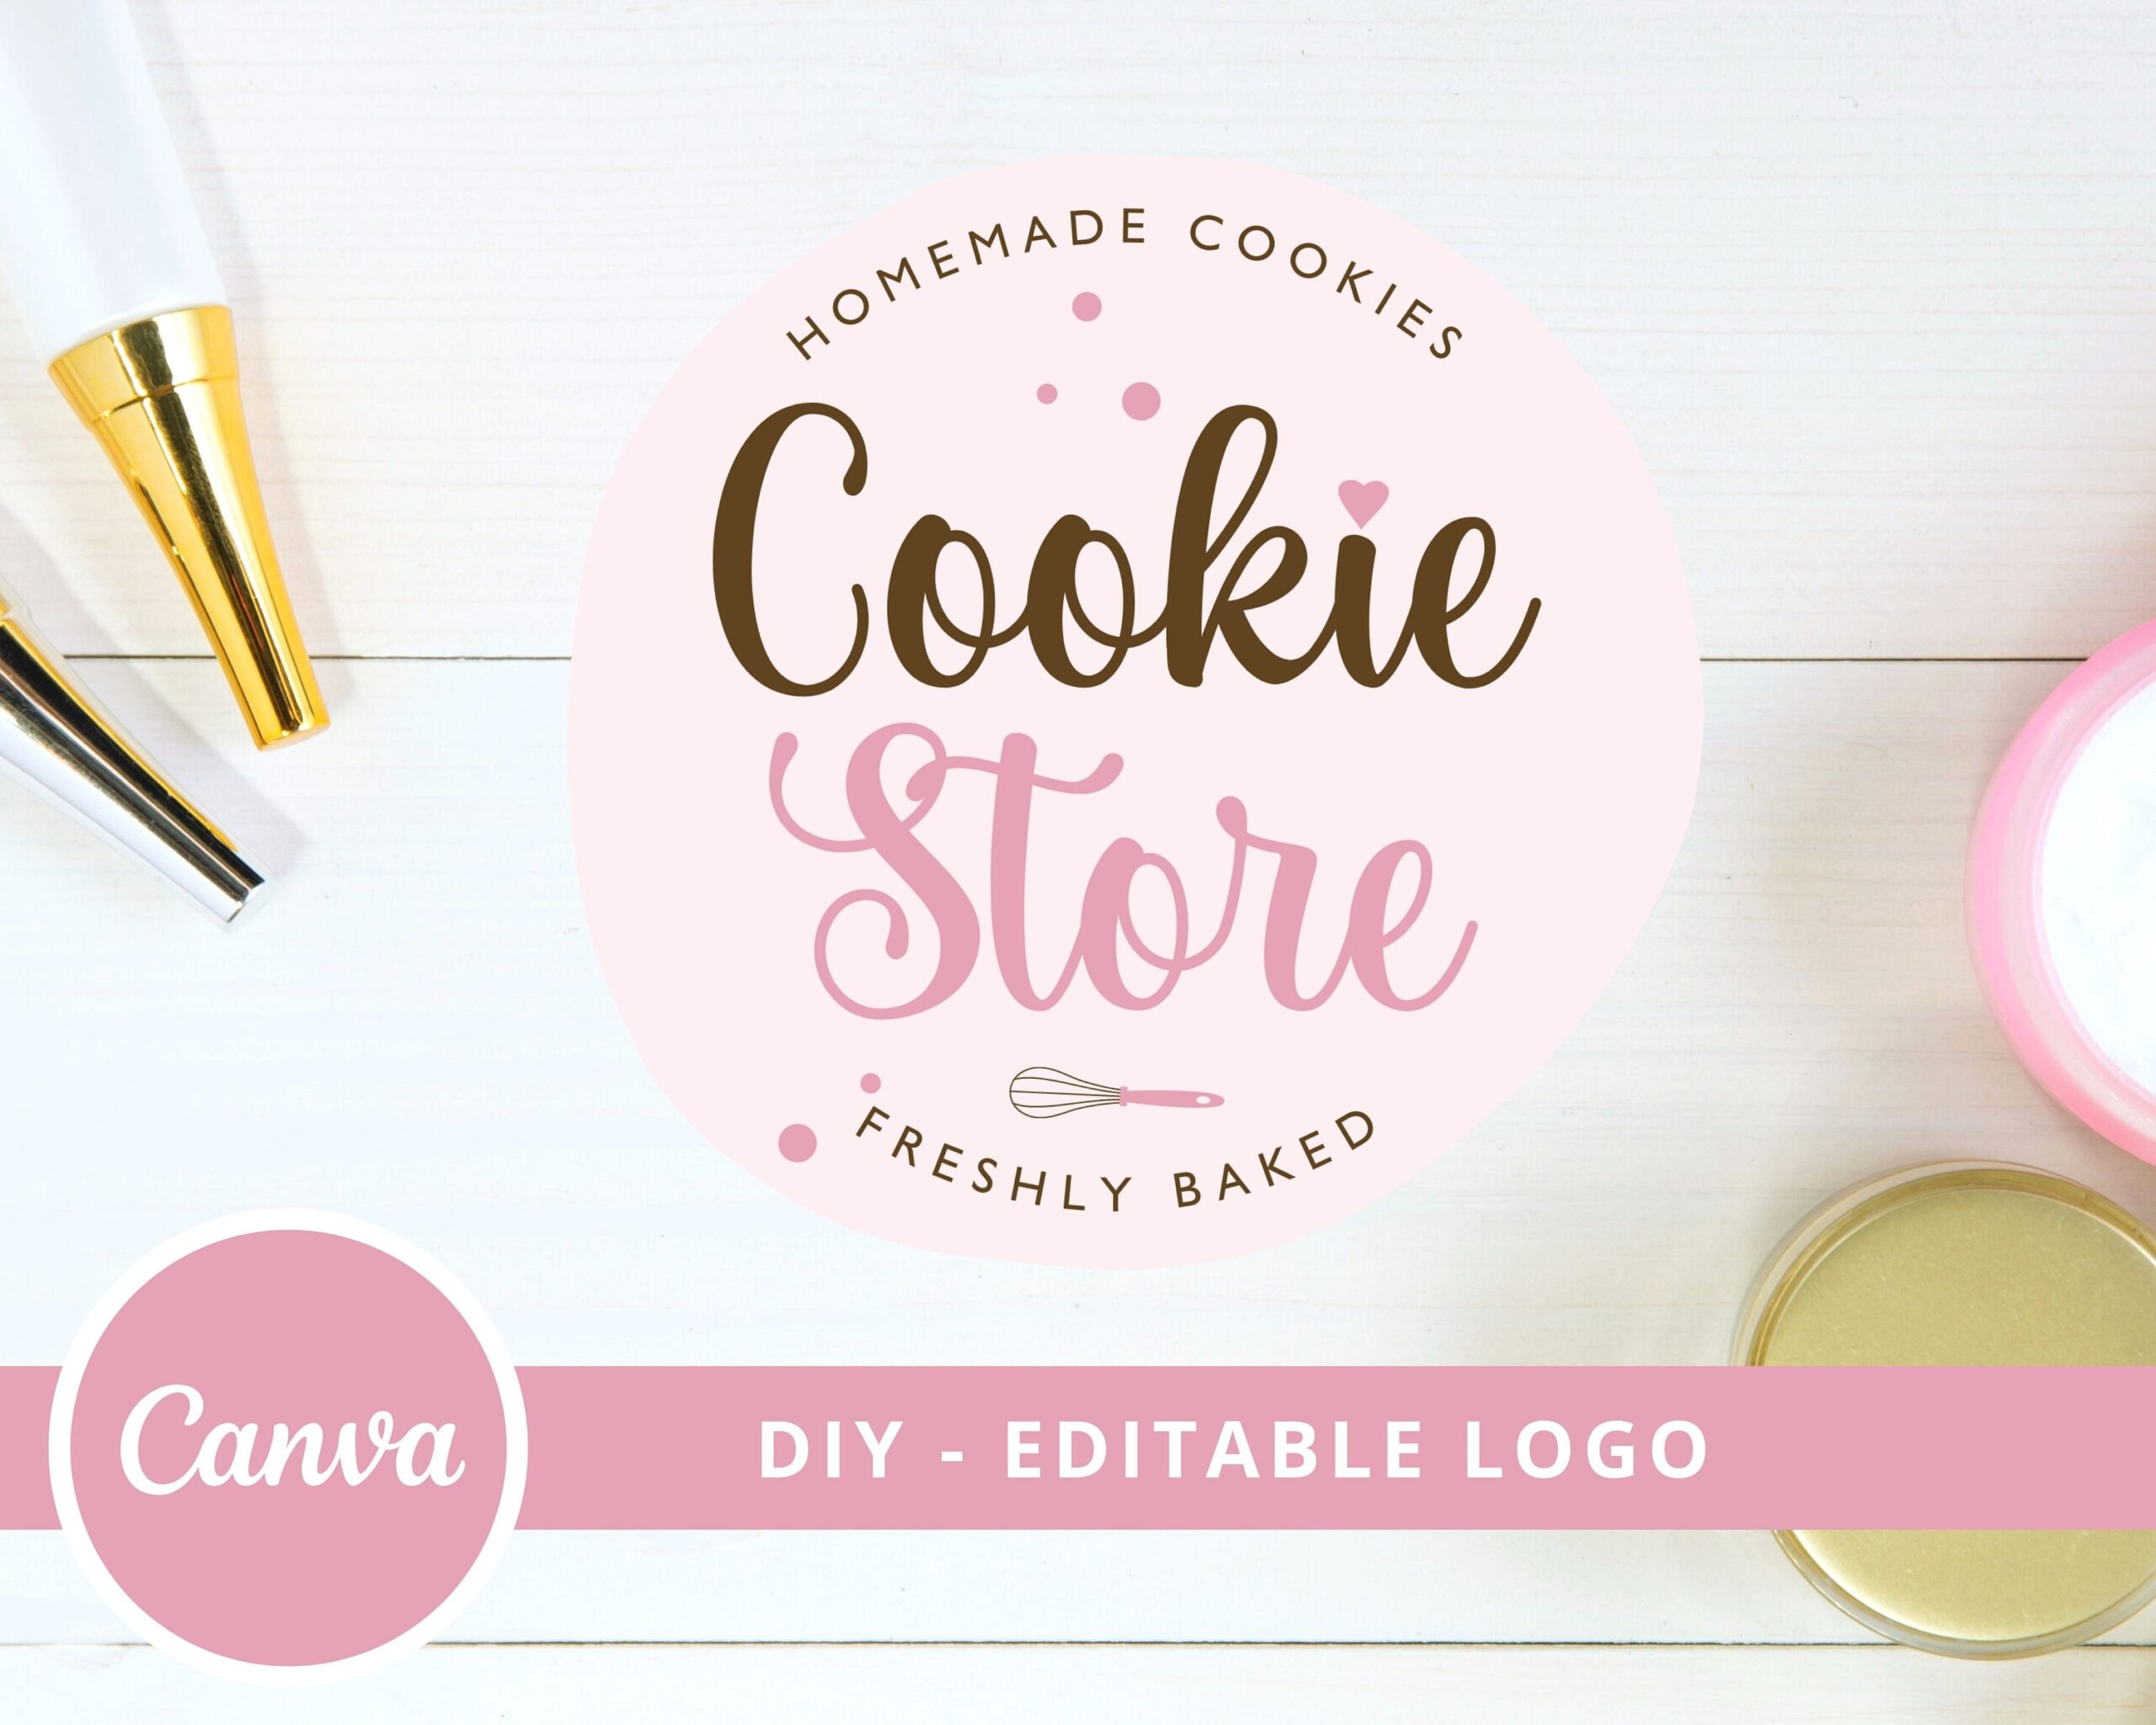 Editable Logo Design - Cookie Store Logo, Handmade Cookies, DIY Edit Yourself Canva Logo Template. Cookie Logo, Logo Maker - Instant Access